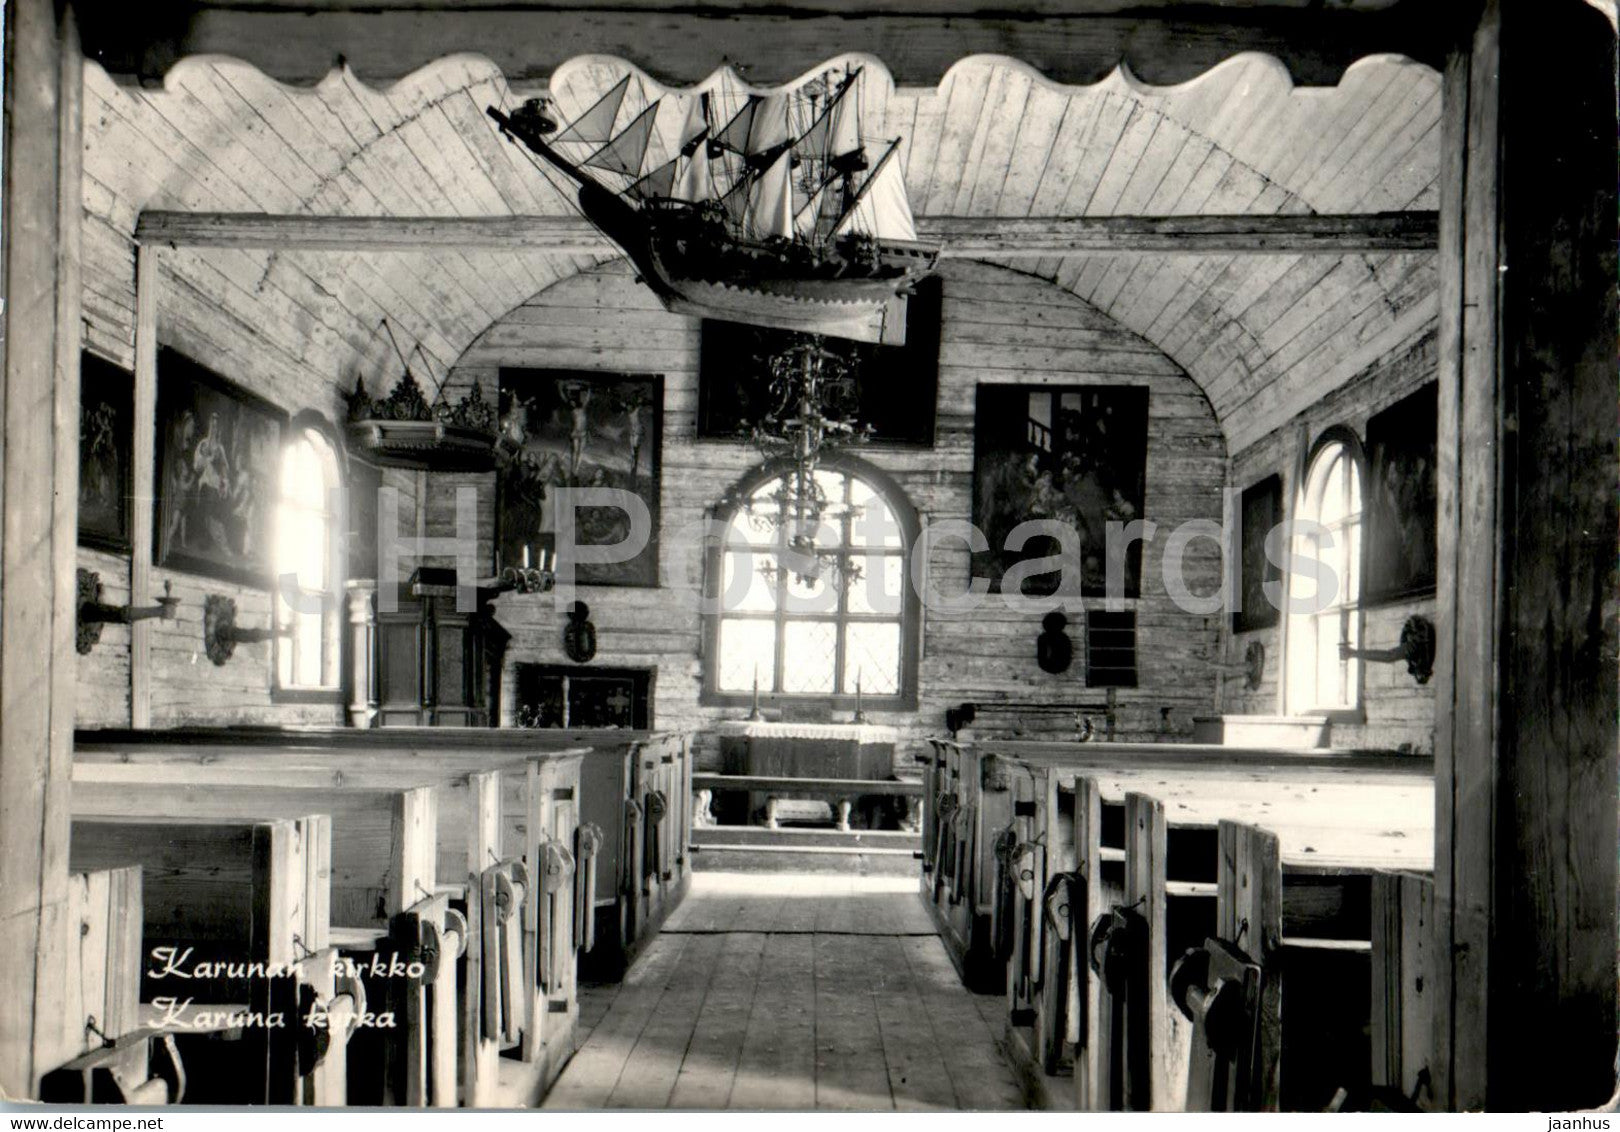 Helsinki - Seurasaaren ulkomuseo - Karunan Kirkko - church - museum - Finland - unused - JH Postcards